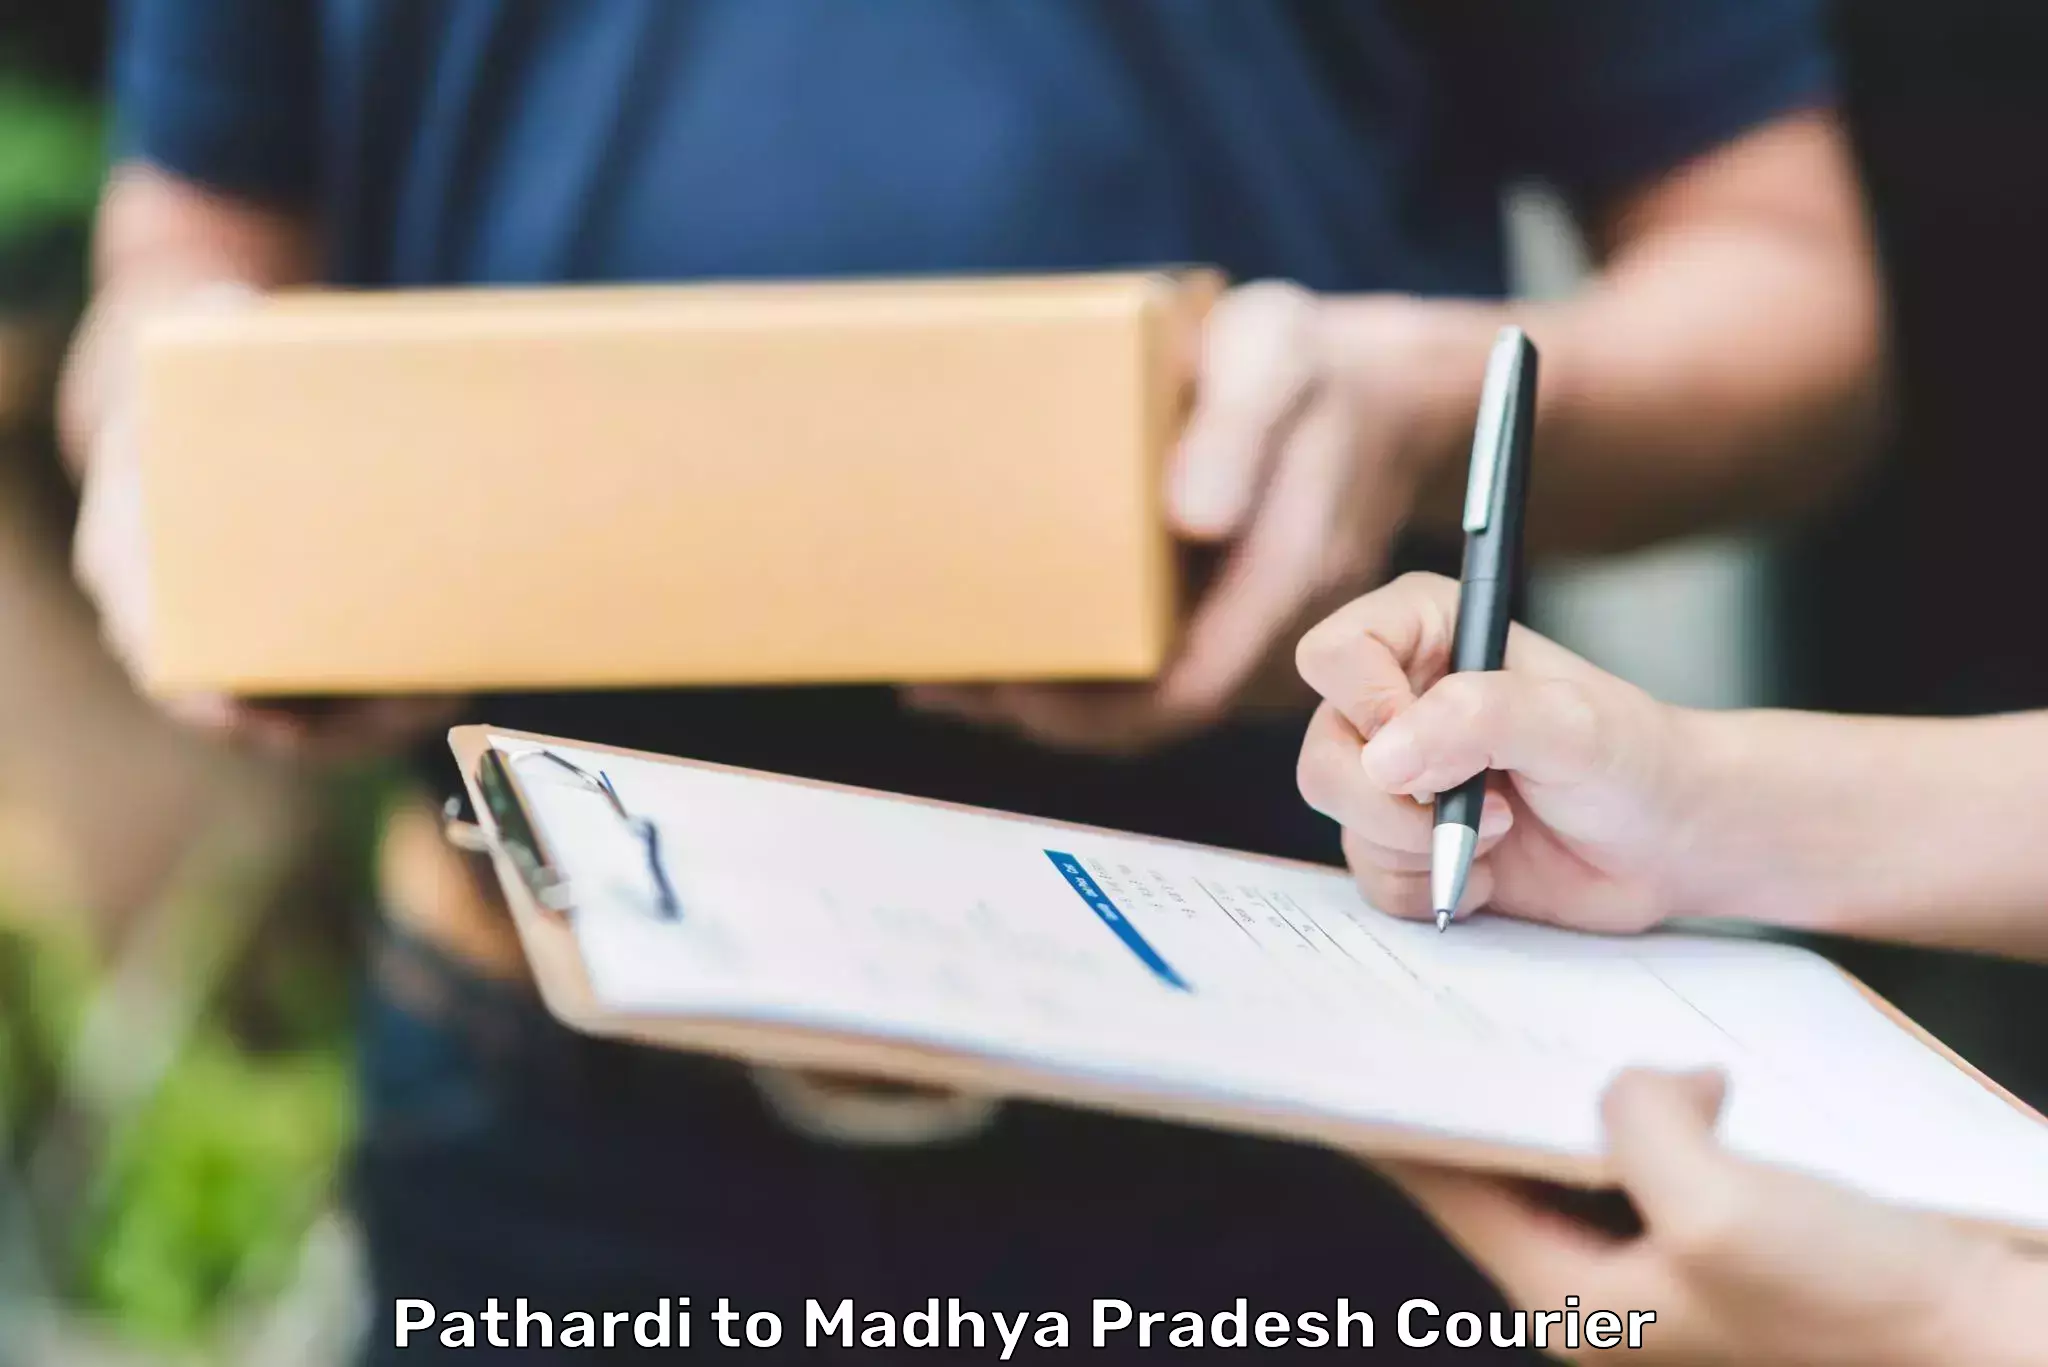 Bulk courier orders Pathardi to Mandla